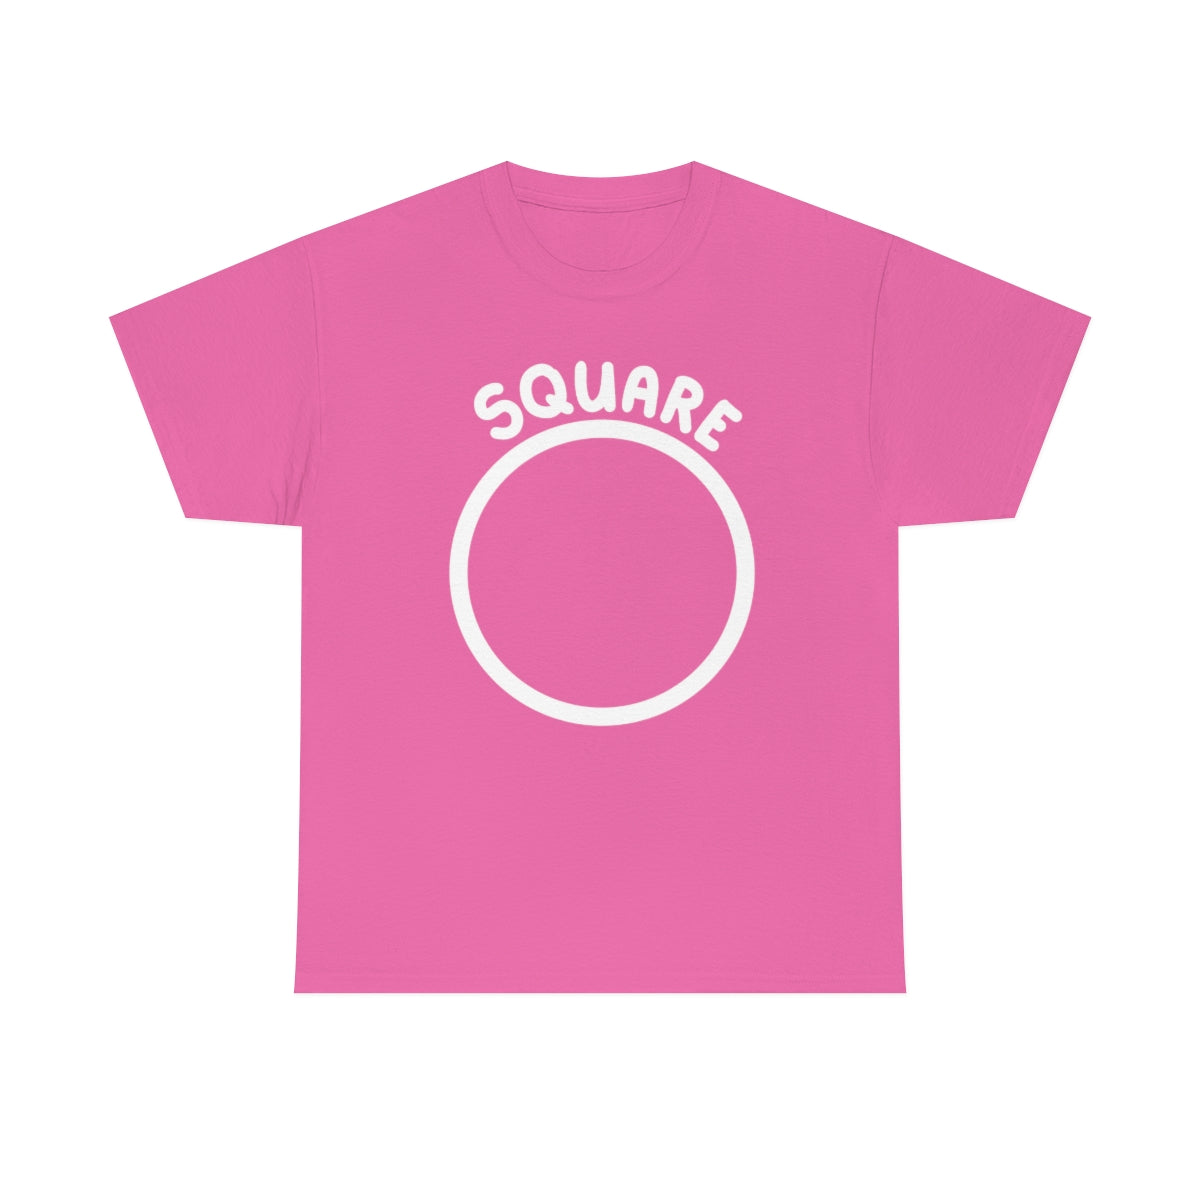 Square - T-Shirt T-Shirt Ooka Pink S 